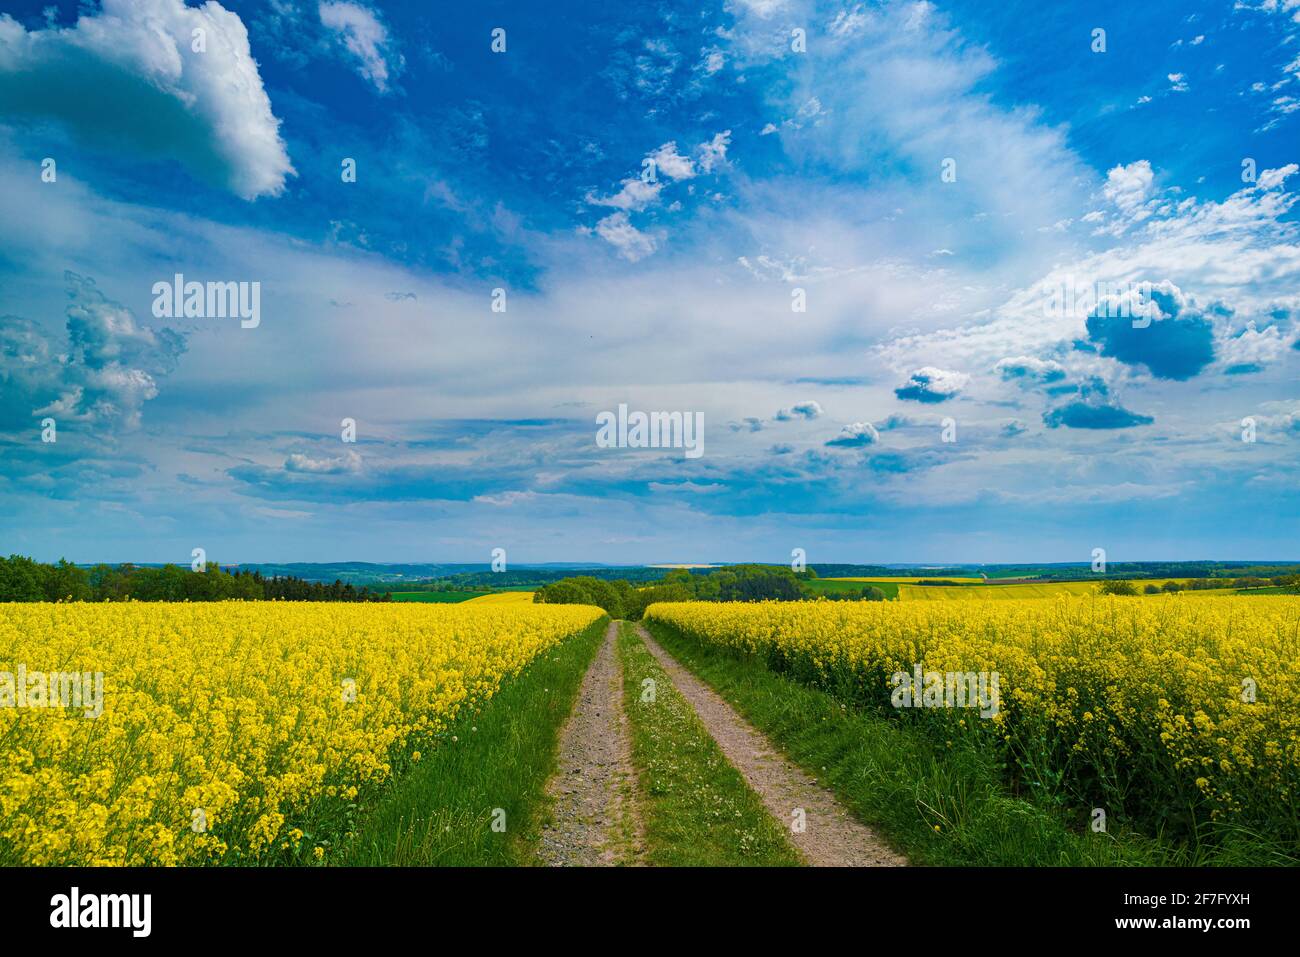 Panorama de campo de colza con carretera Foto de stock